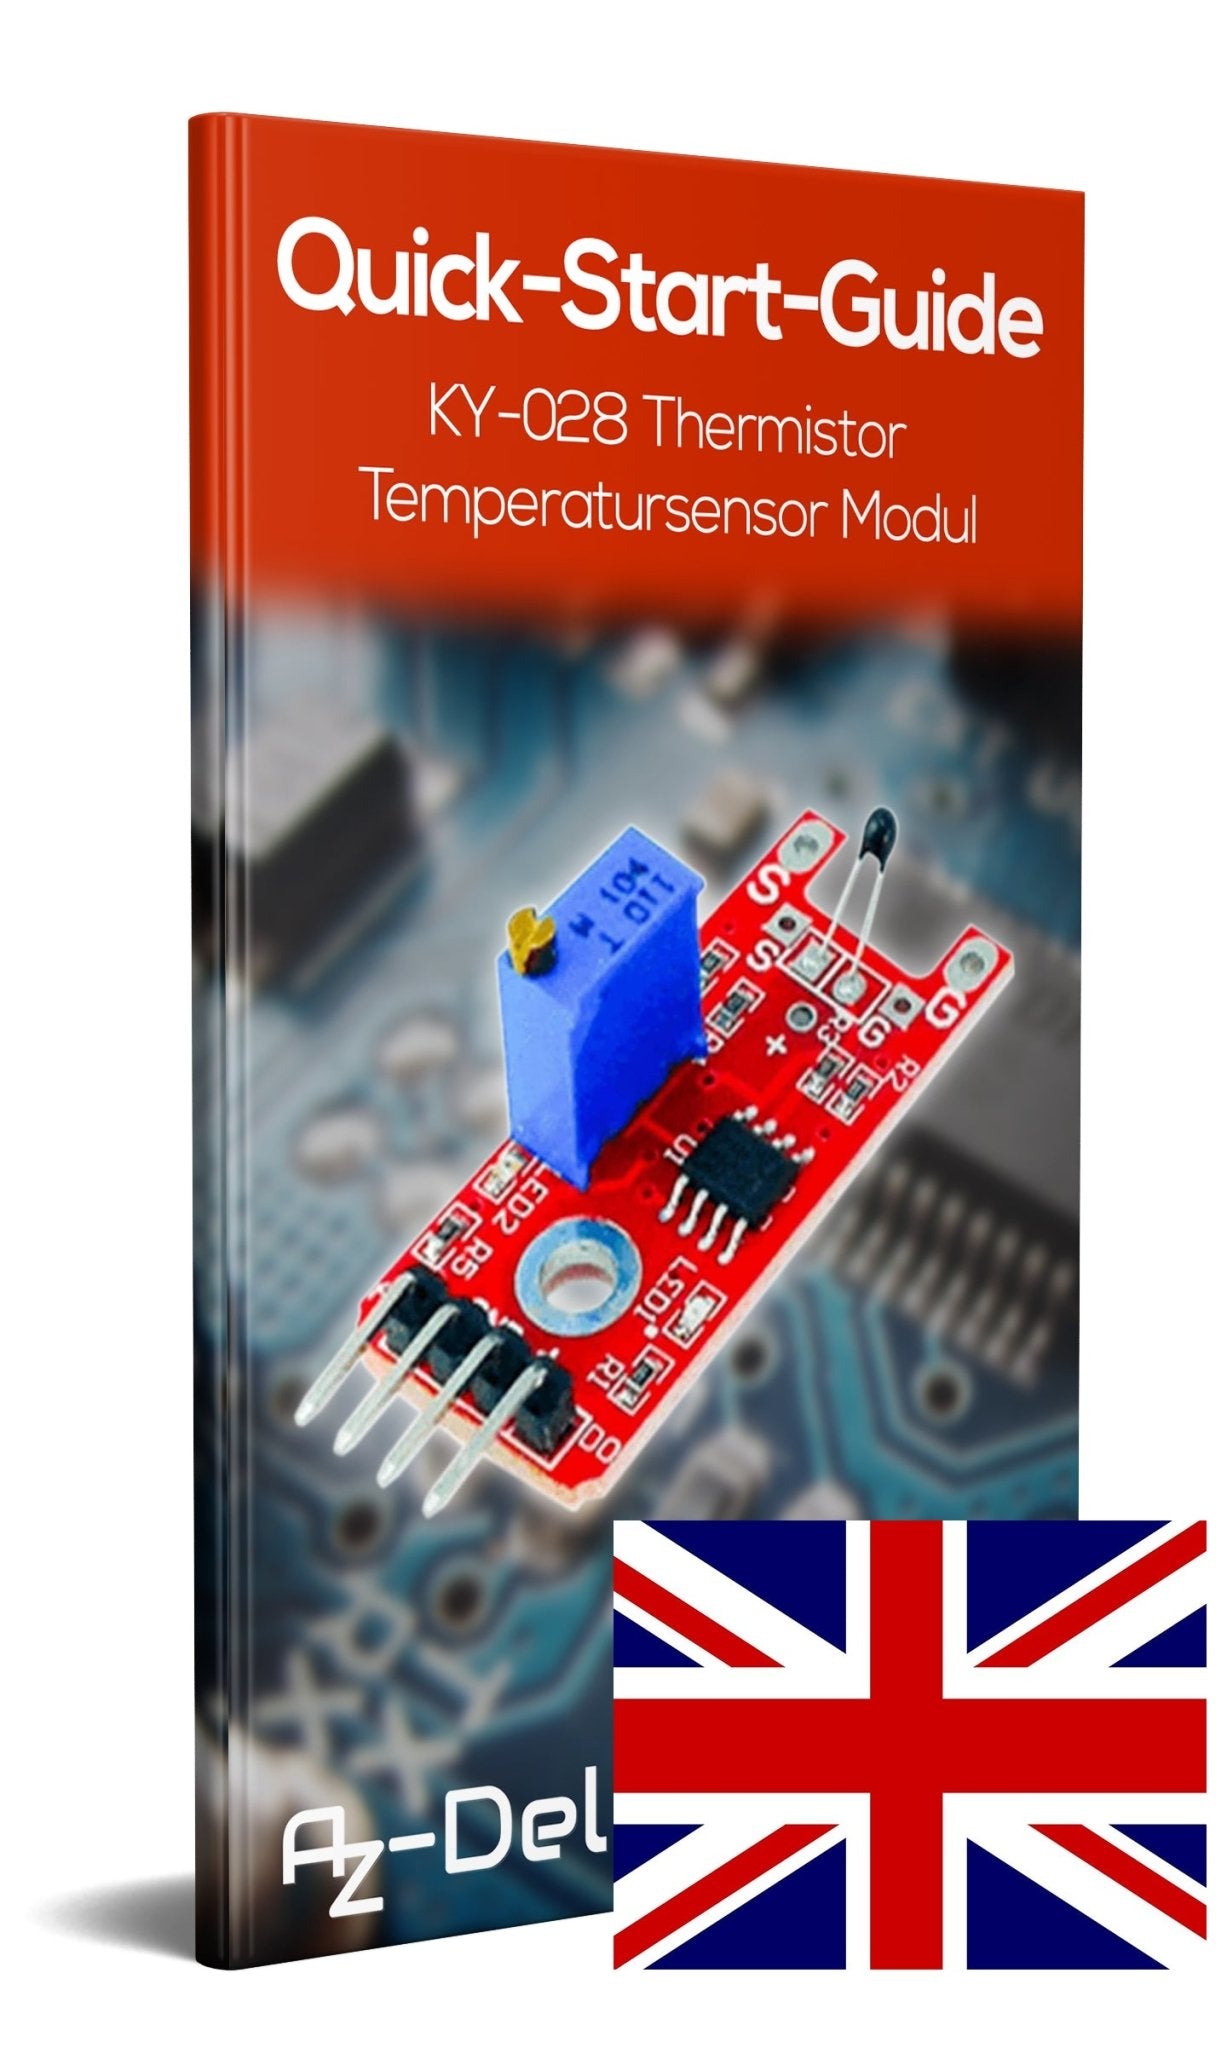 KY-028 Thermistor Temperatursensor - AZ-Delivery